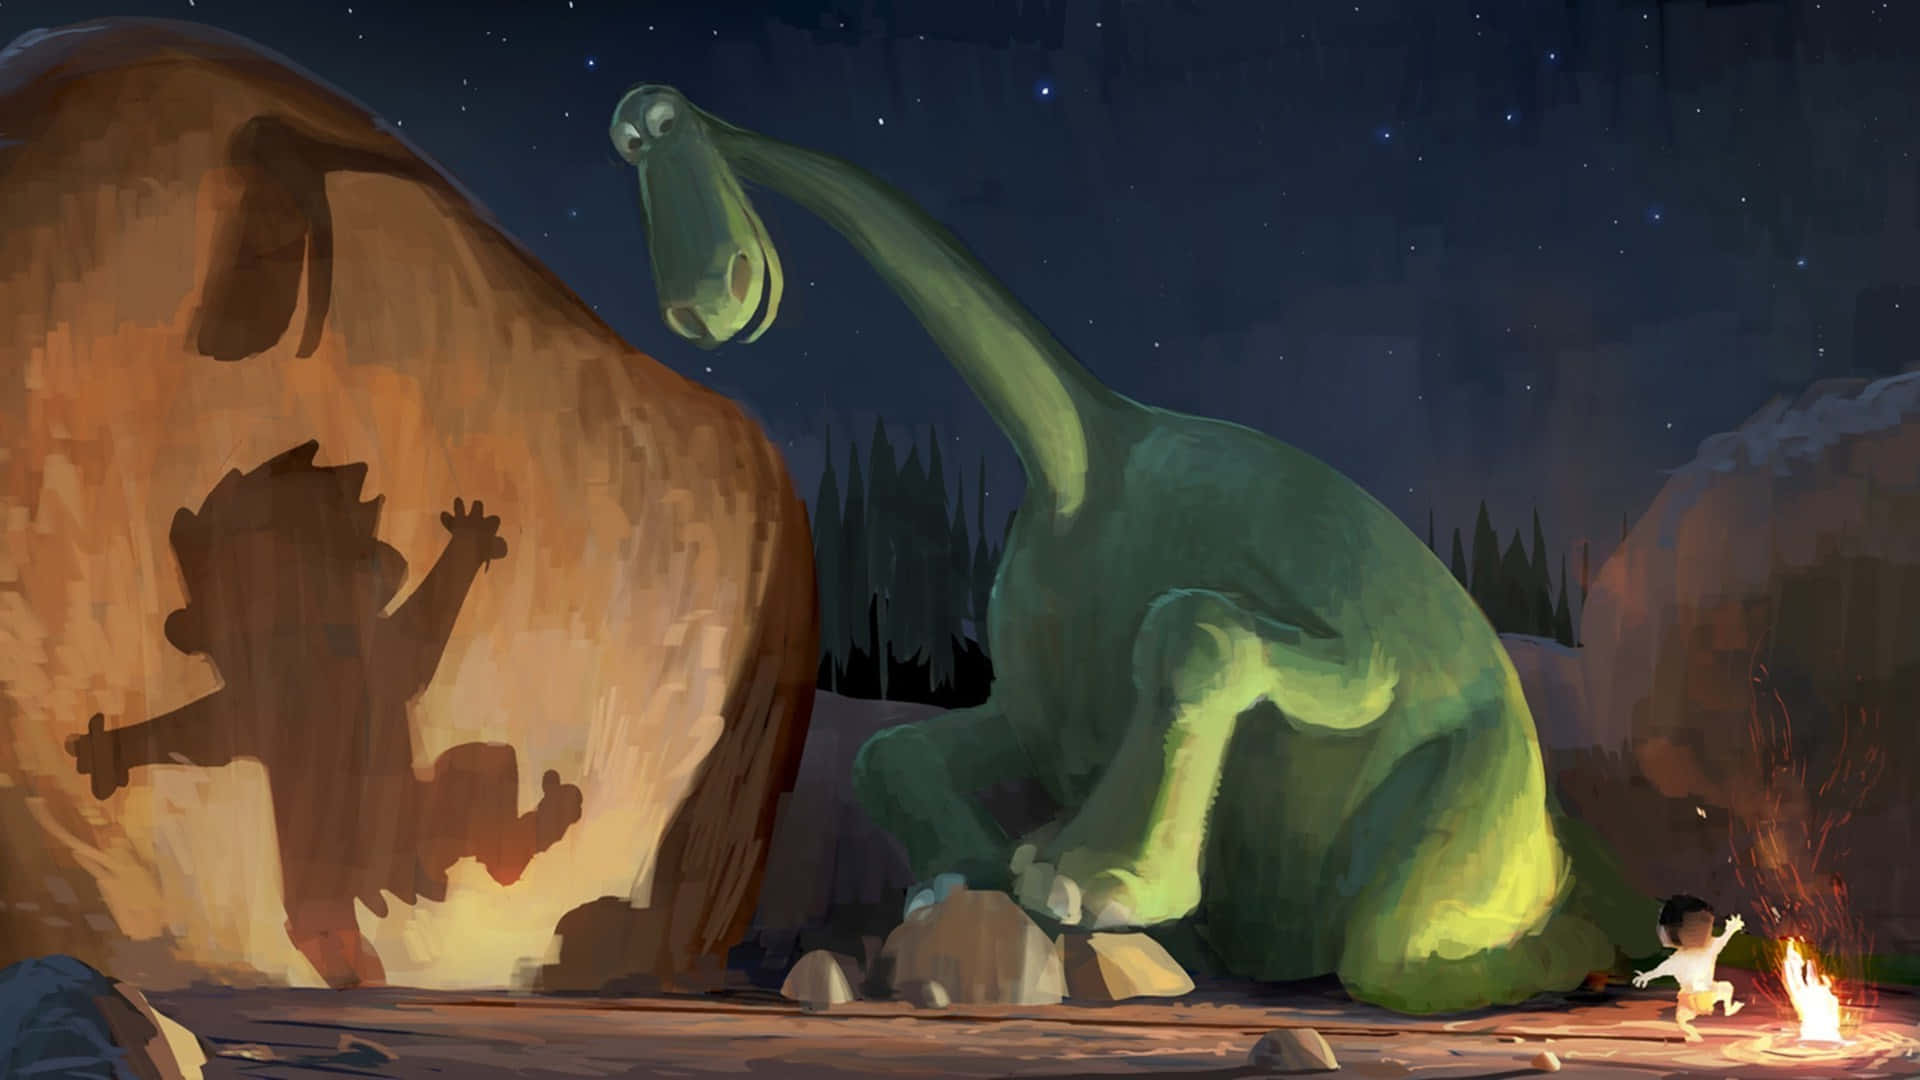 Pixarerhellt Immer Unsere Herzen